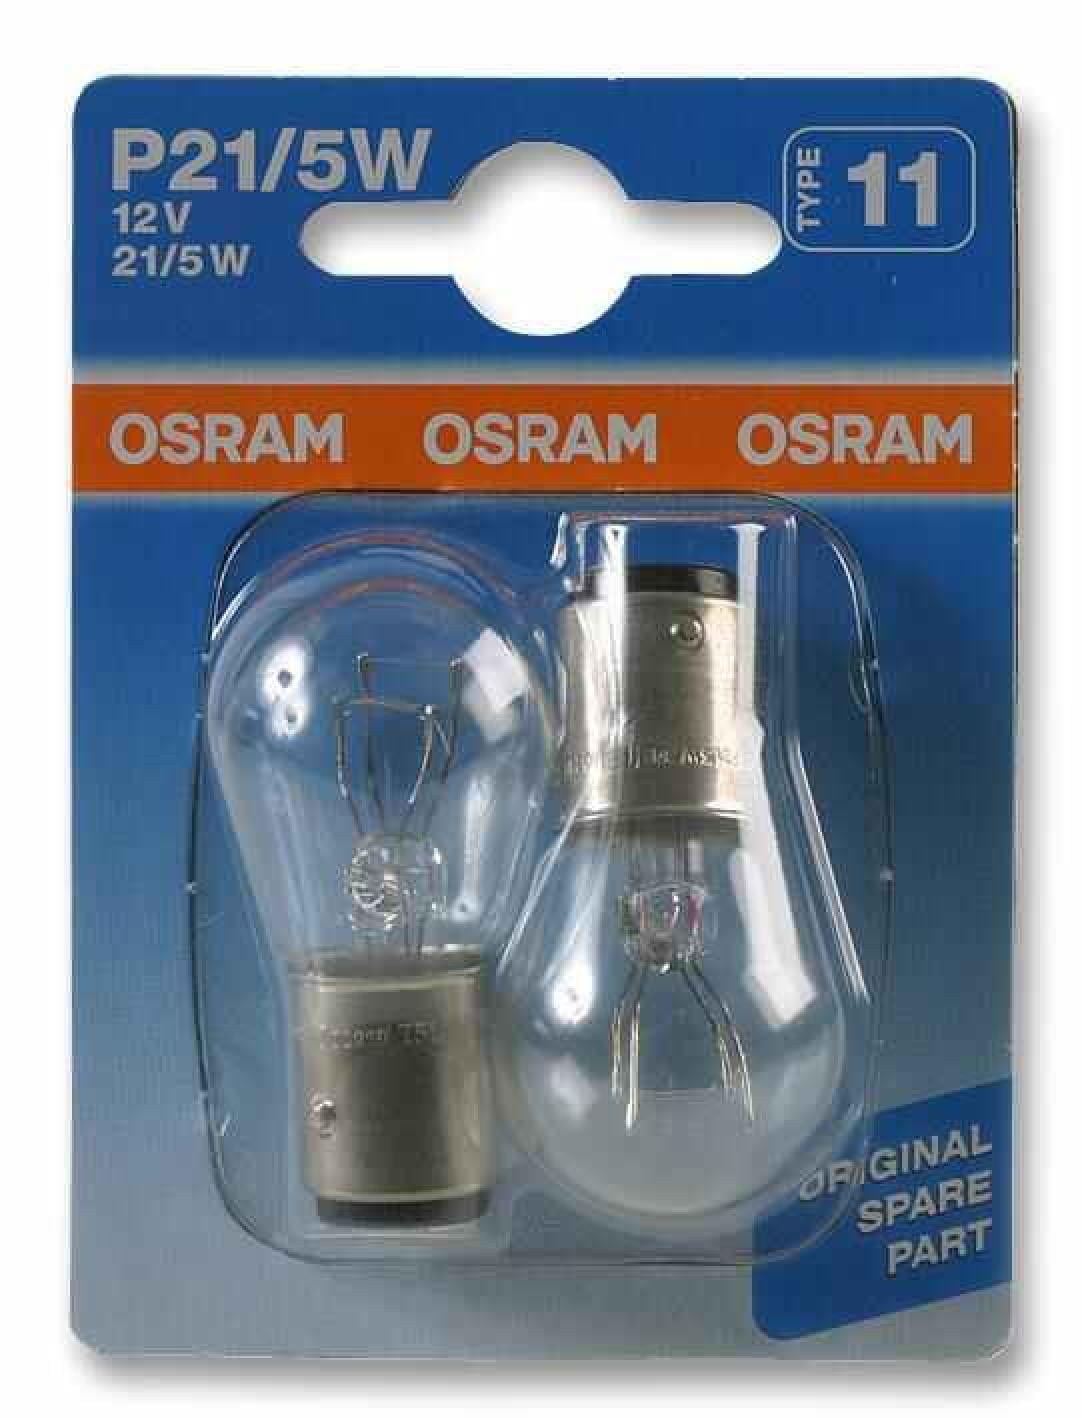 OSRAM - 12V 21/5W P21/5W BAY15d Car Side / Tail Light Bulb (Twin Pack)